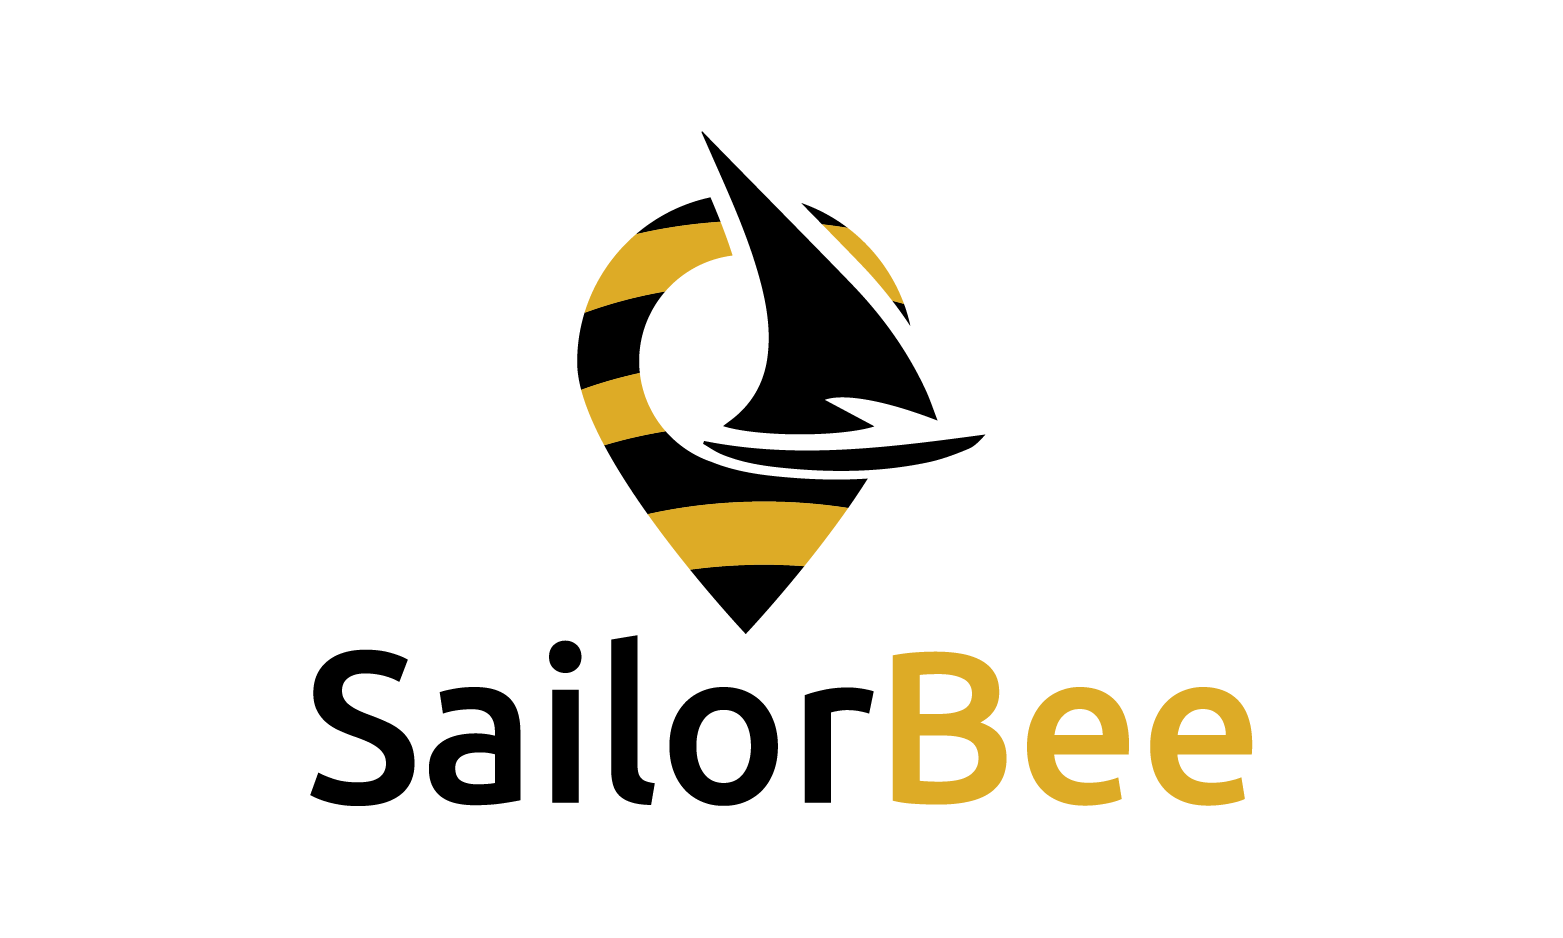 SailorBee.com - Creative brandable domain for sale